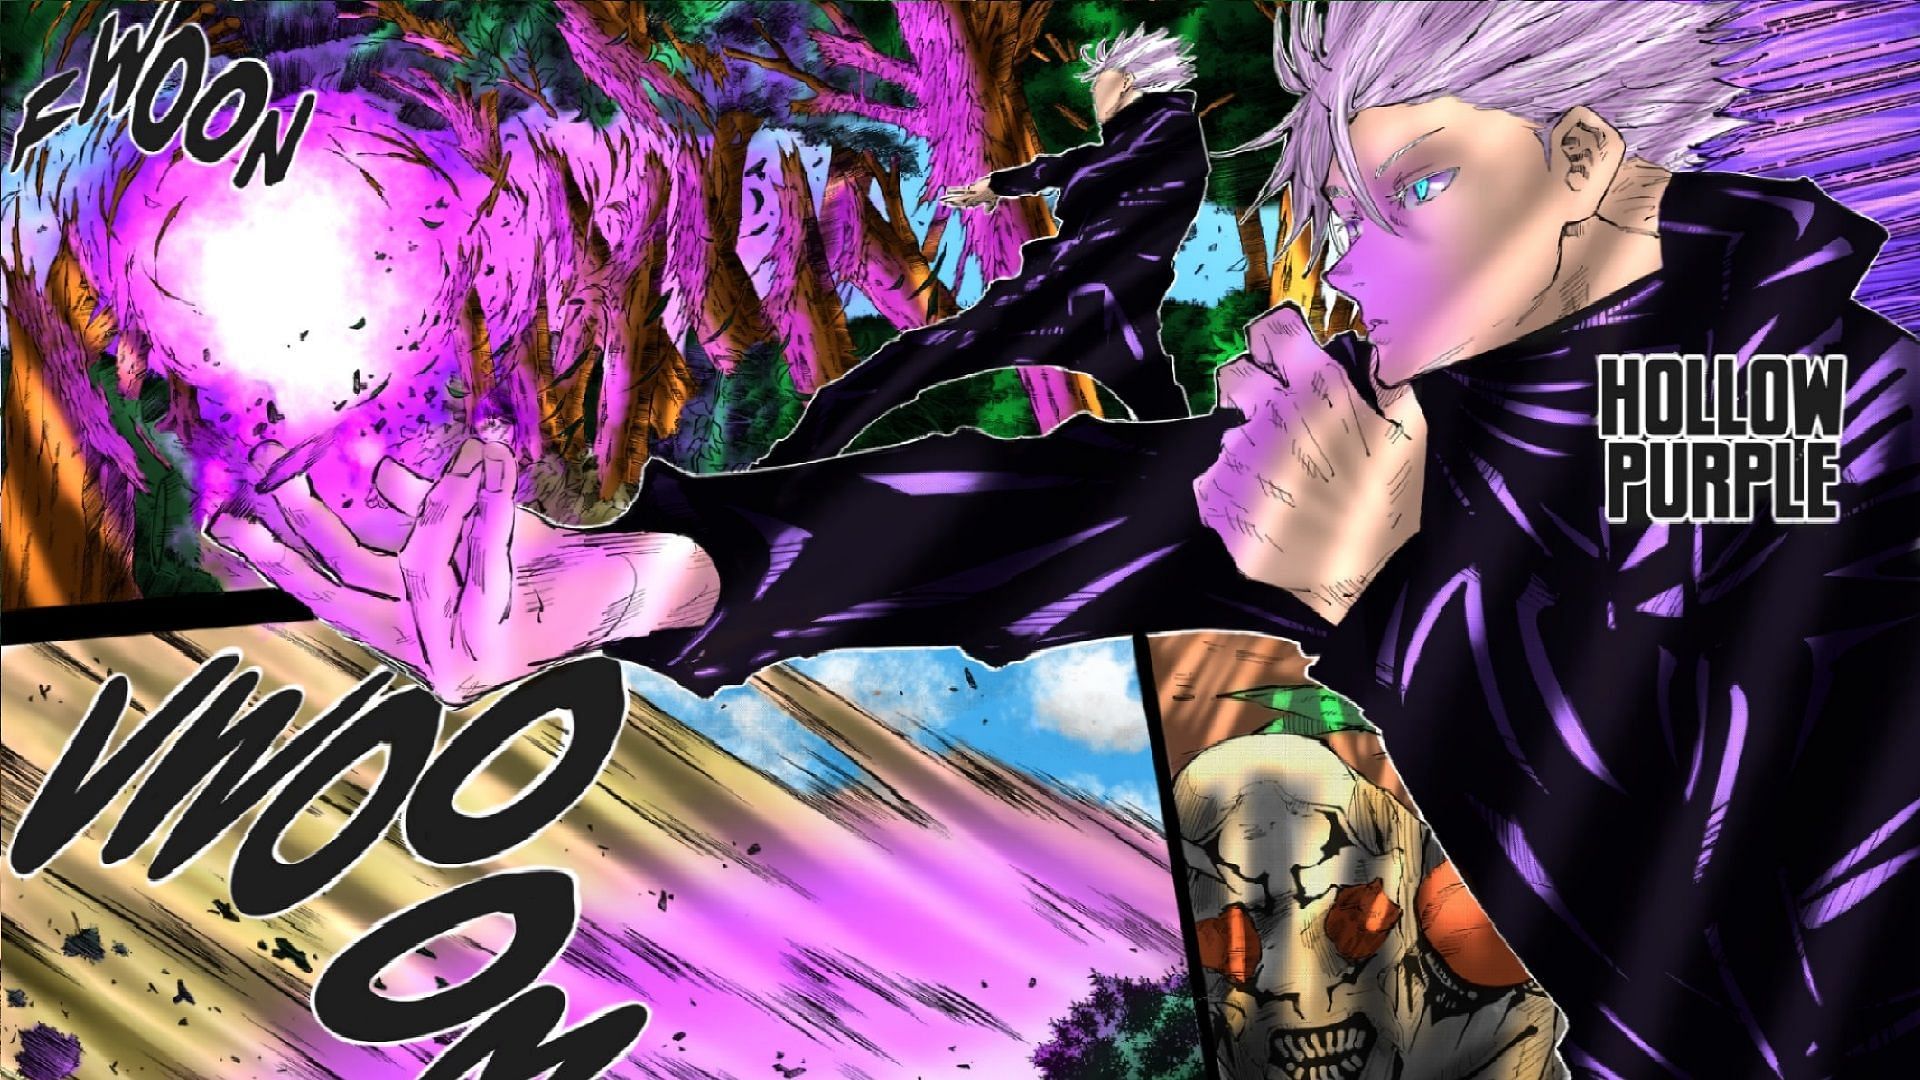 Gojo using Hollow Purple in Jujutsu Kaisen (Image via Shueisha, colorization by @yamalvrr)